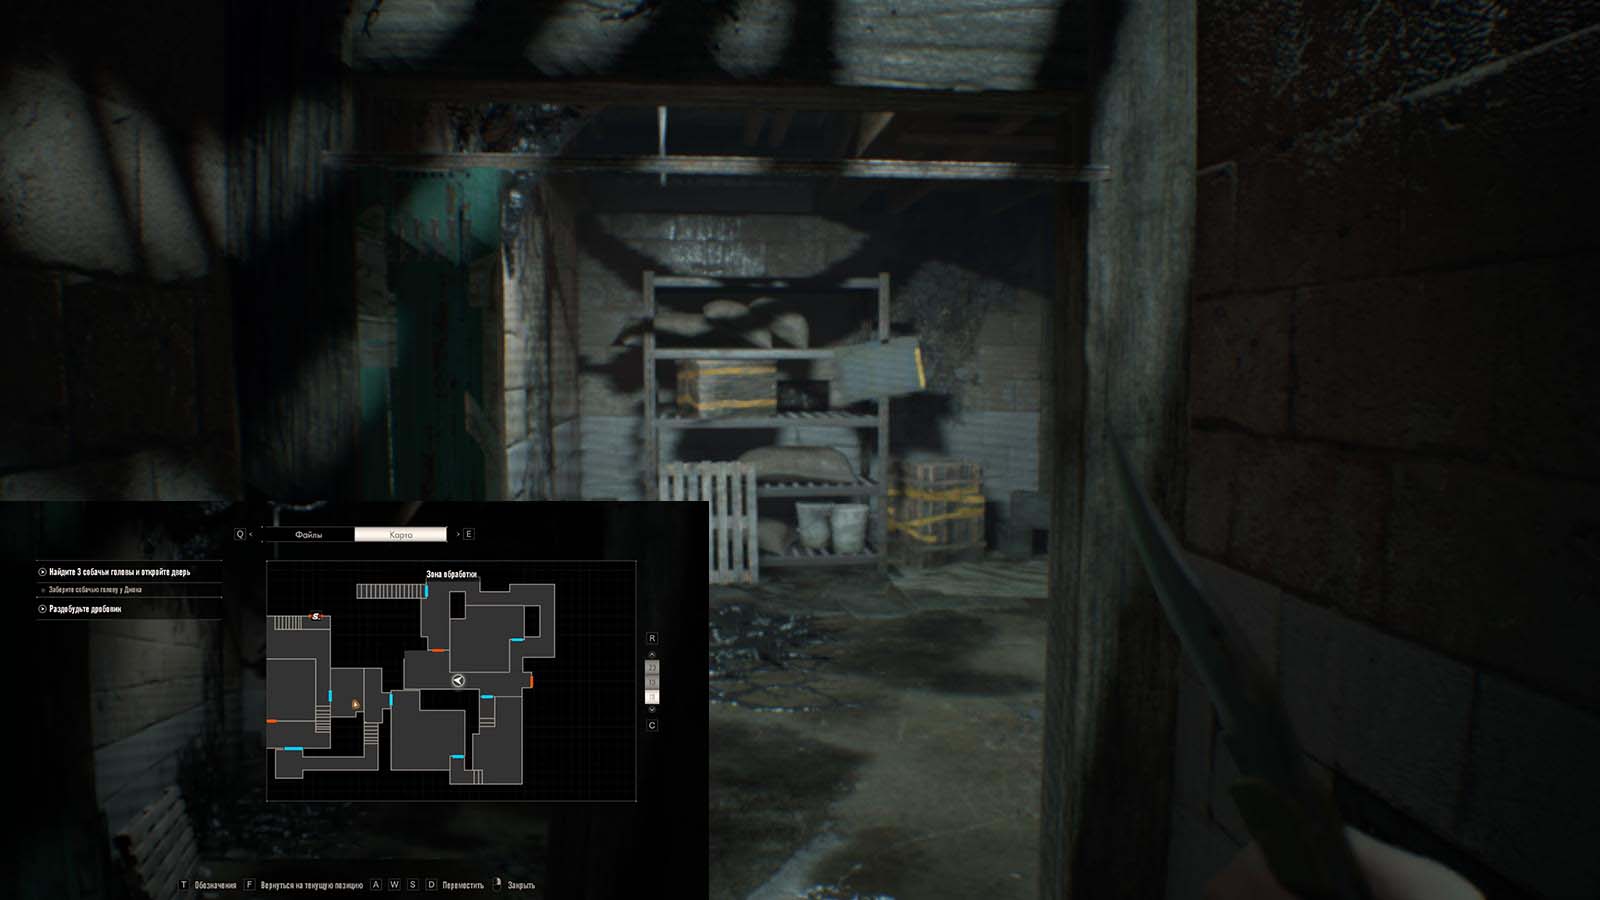 Ключ змея резидент 7. Зона обработки Resident Evil 7. Ключ скорпиона резидент ИВЛ 7. Resident Evil 7 ключ скорпиона. Зона обработки Resident Evil 7 на карте.